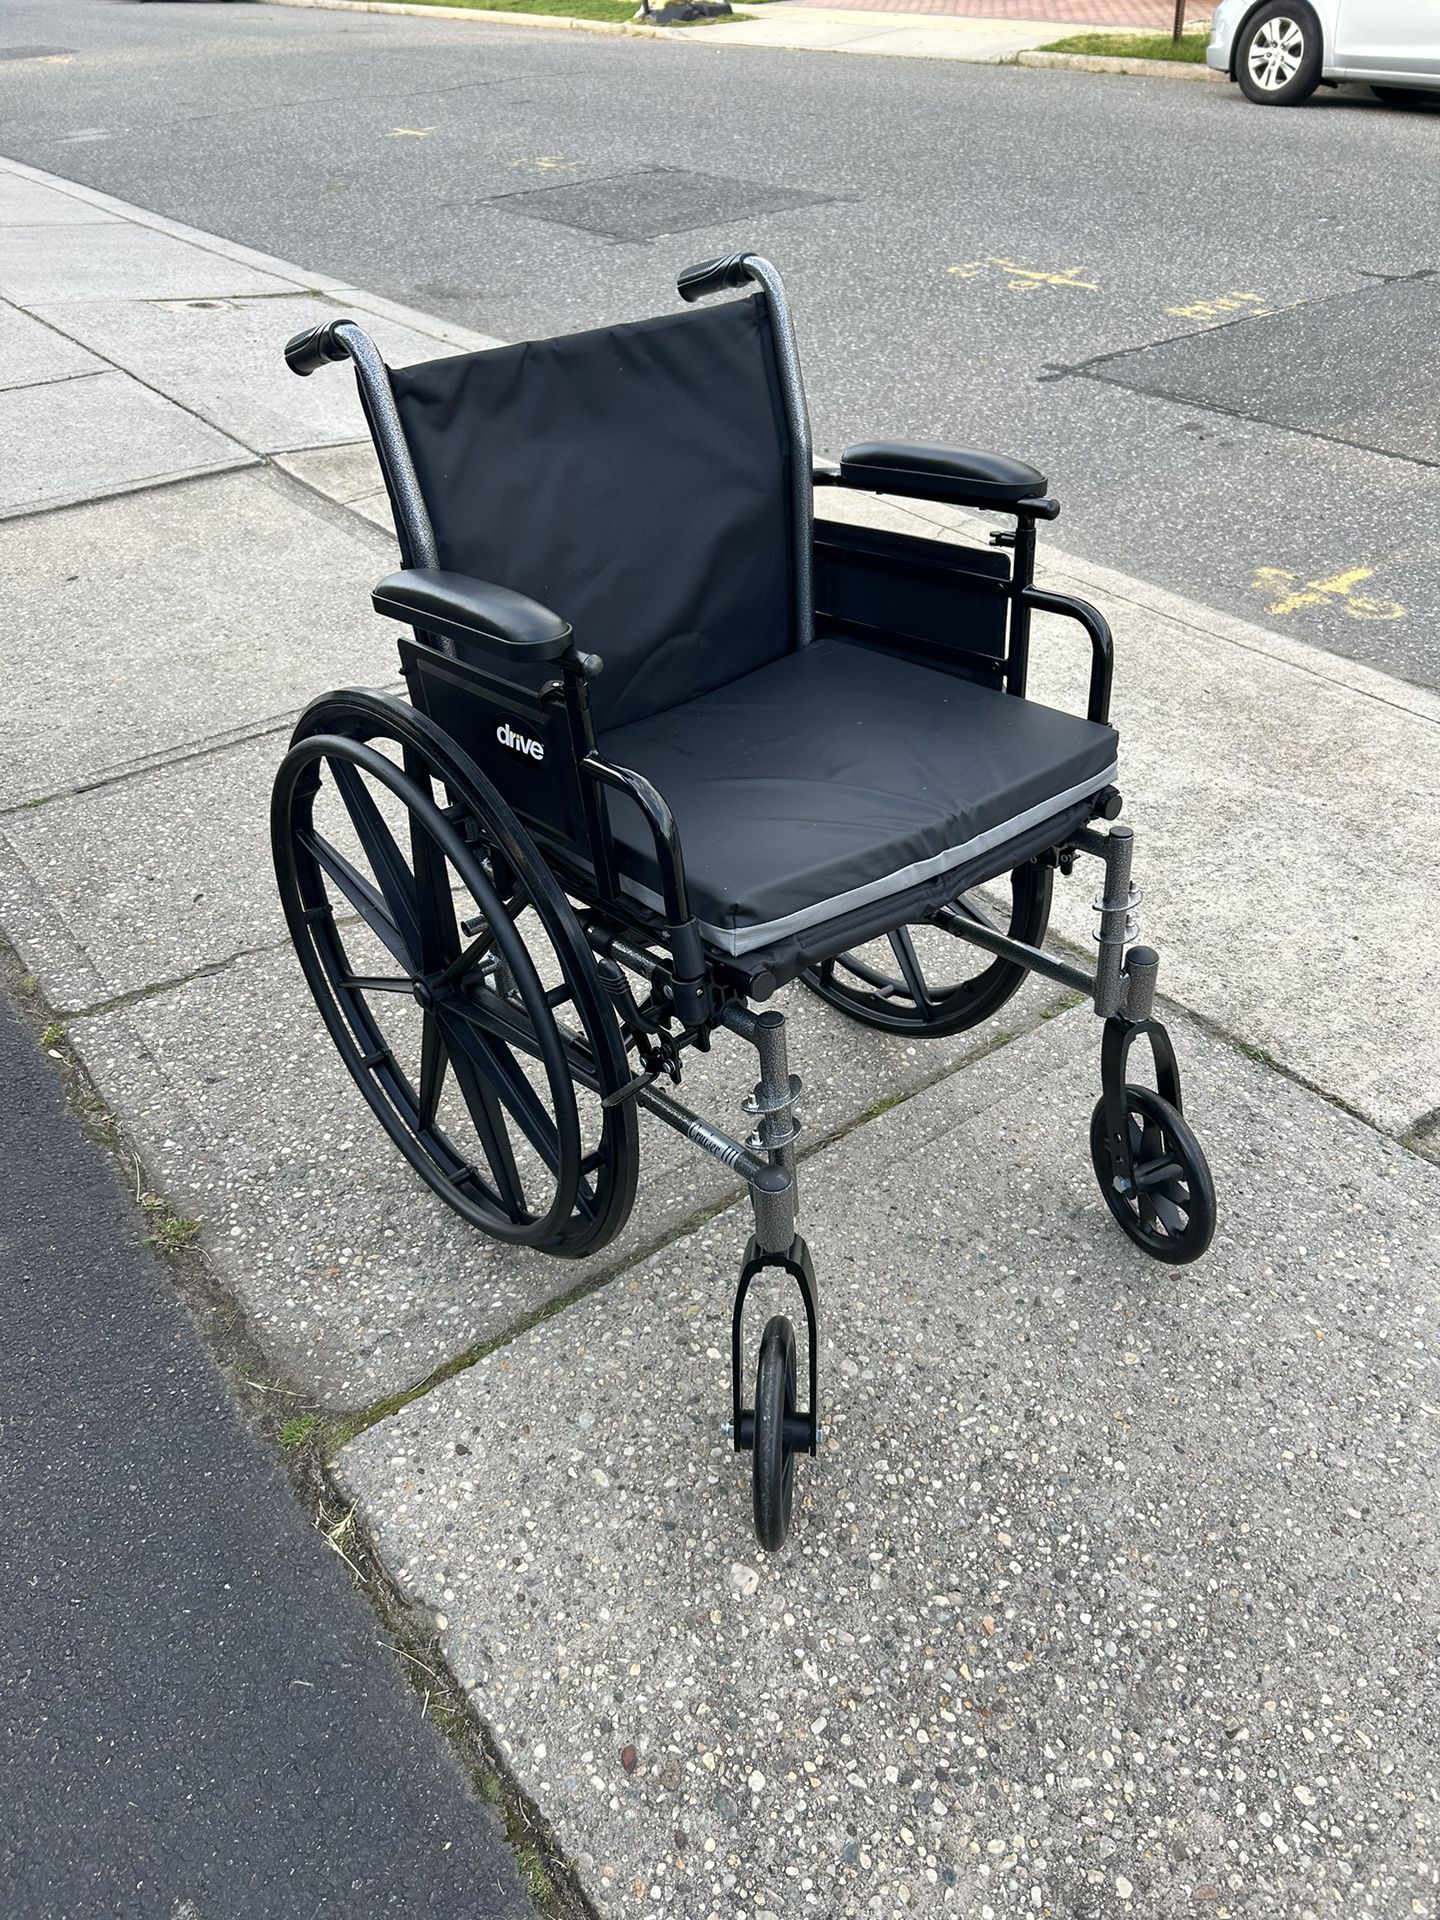 Wheelchair - FREE